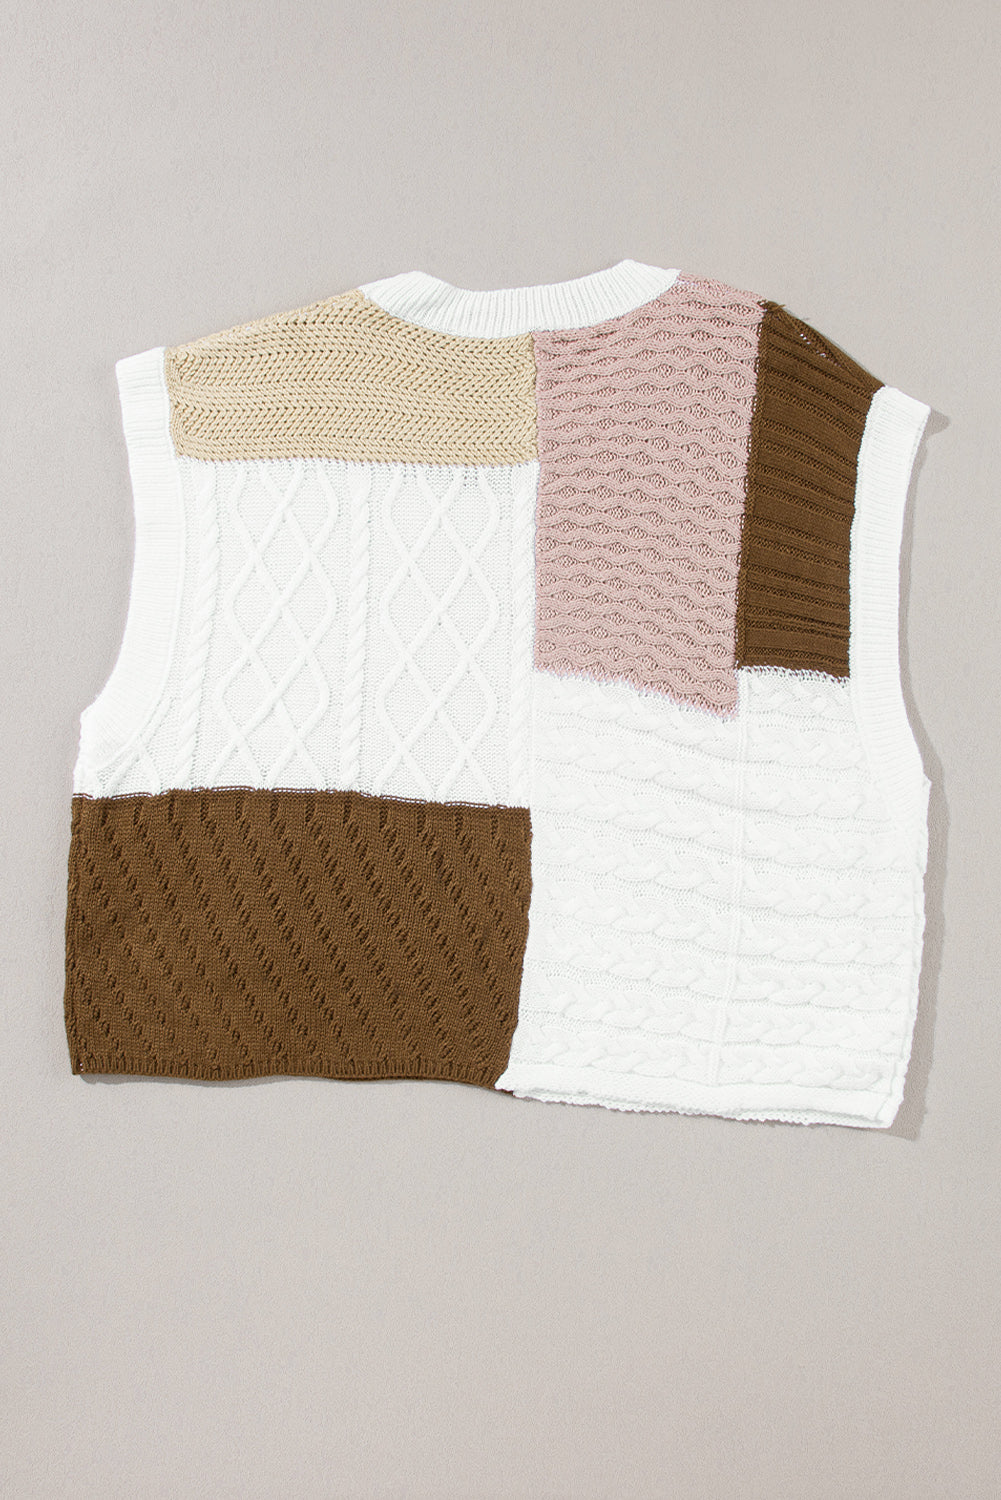 Mehrfarbiges, strukturiertes Pullover-T-Shirt im Colorblock-Mix